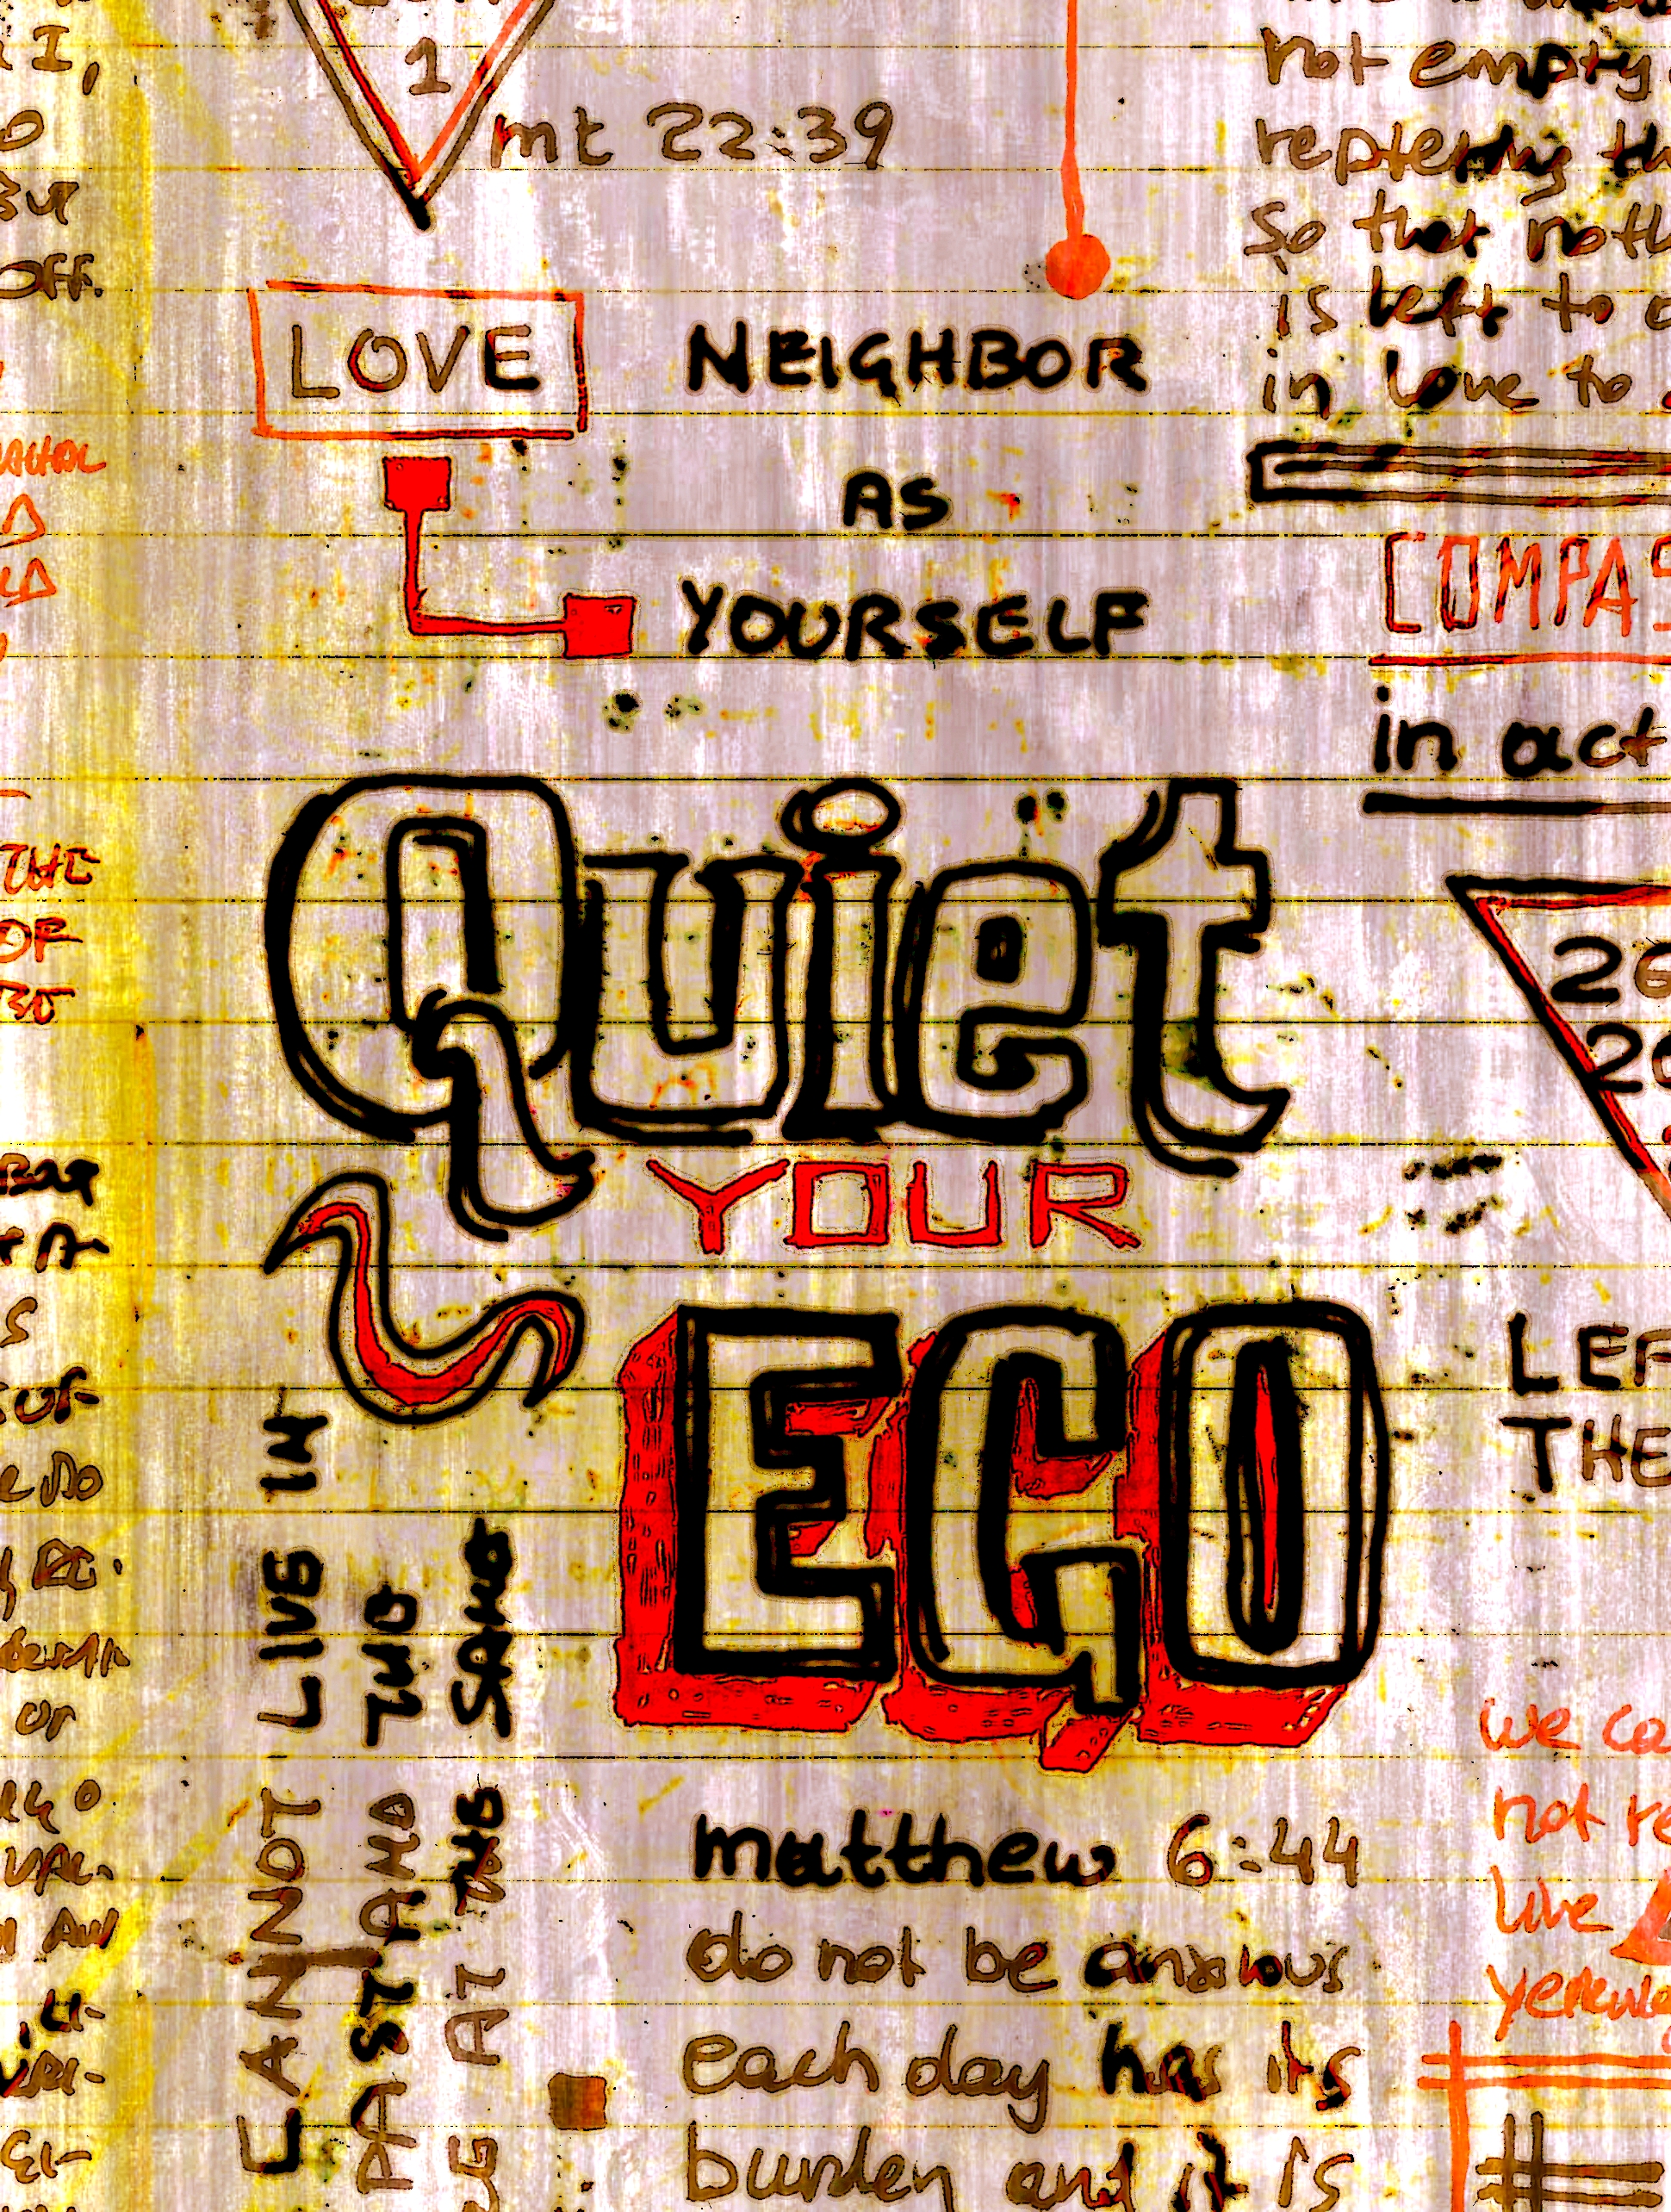 quiet your ego